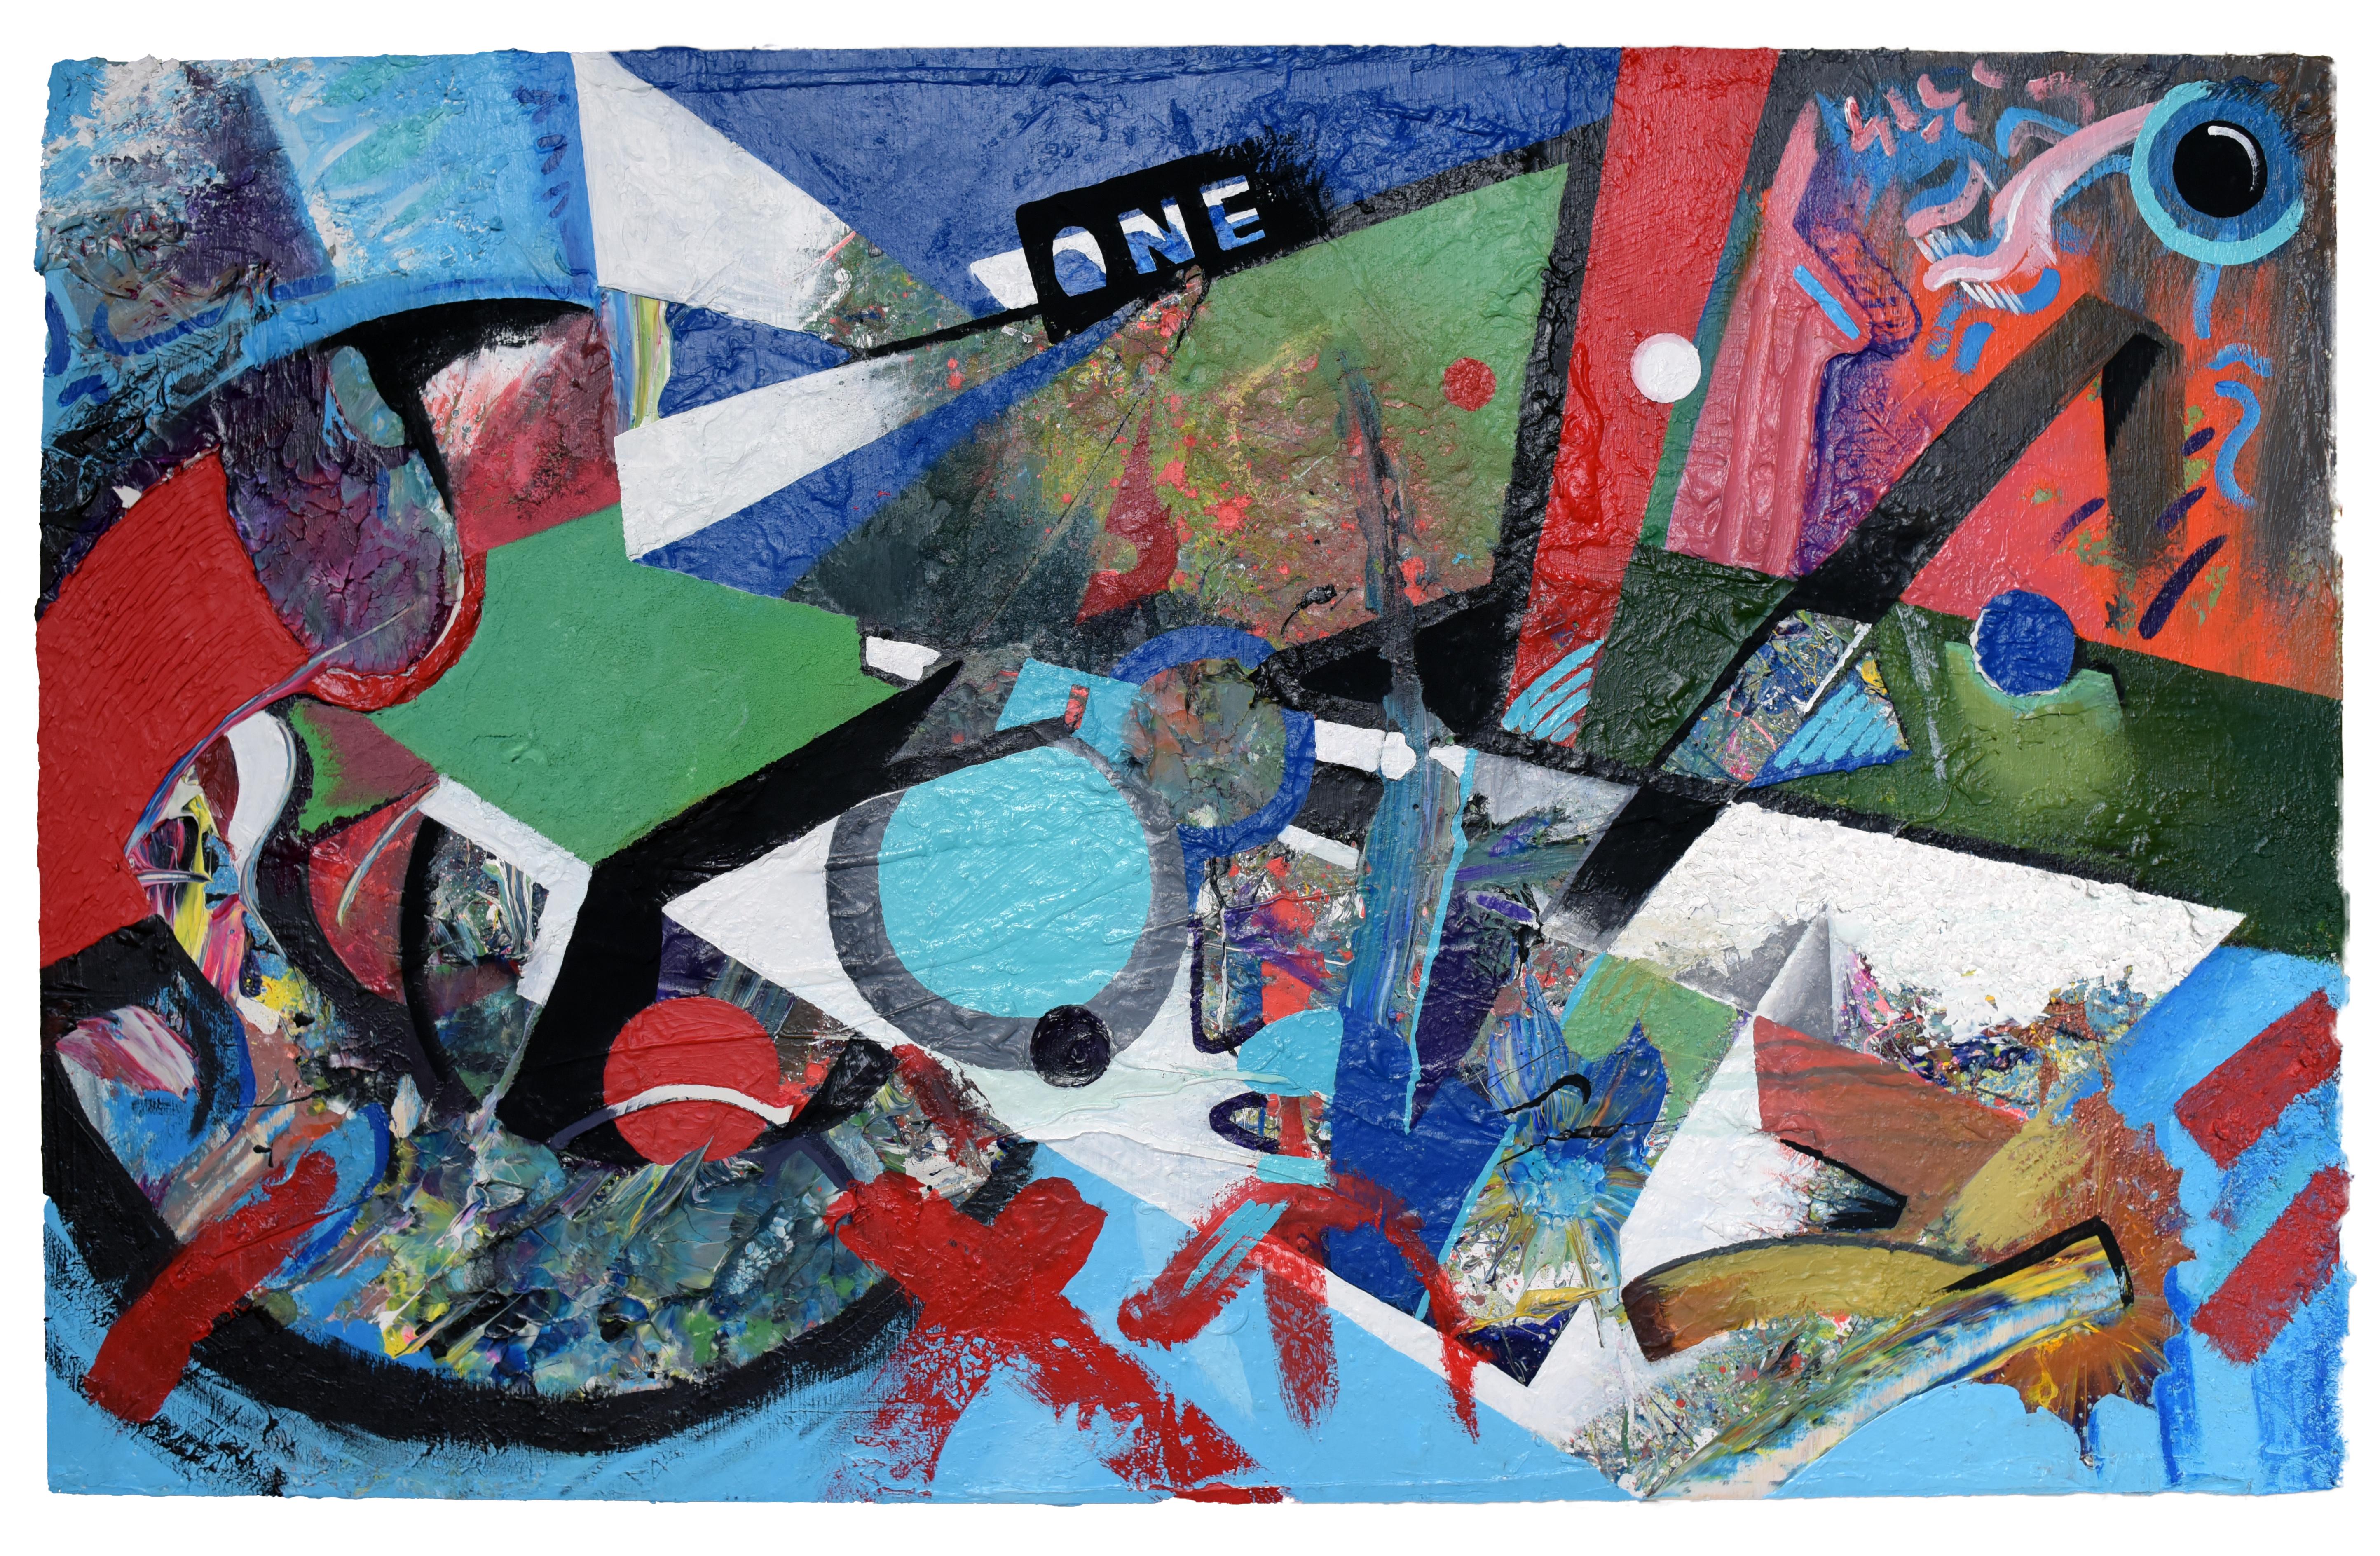 Abstract Painting Connor Hughes - Disparate - Expressionnisme abstrait, peinture de style graffiti, couleurs vives